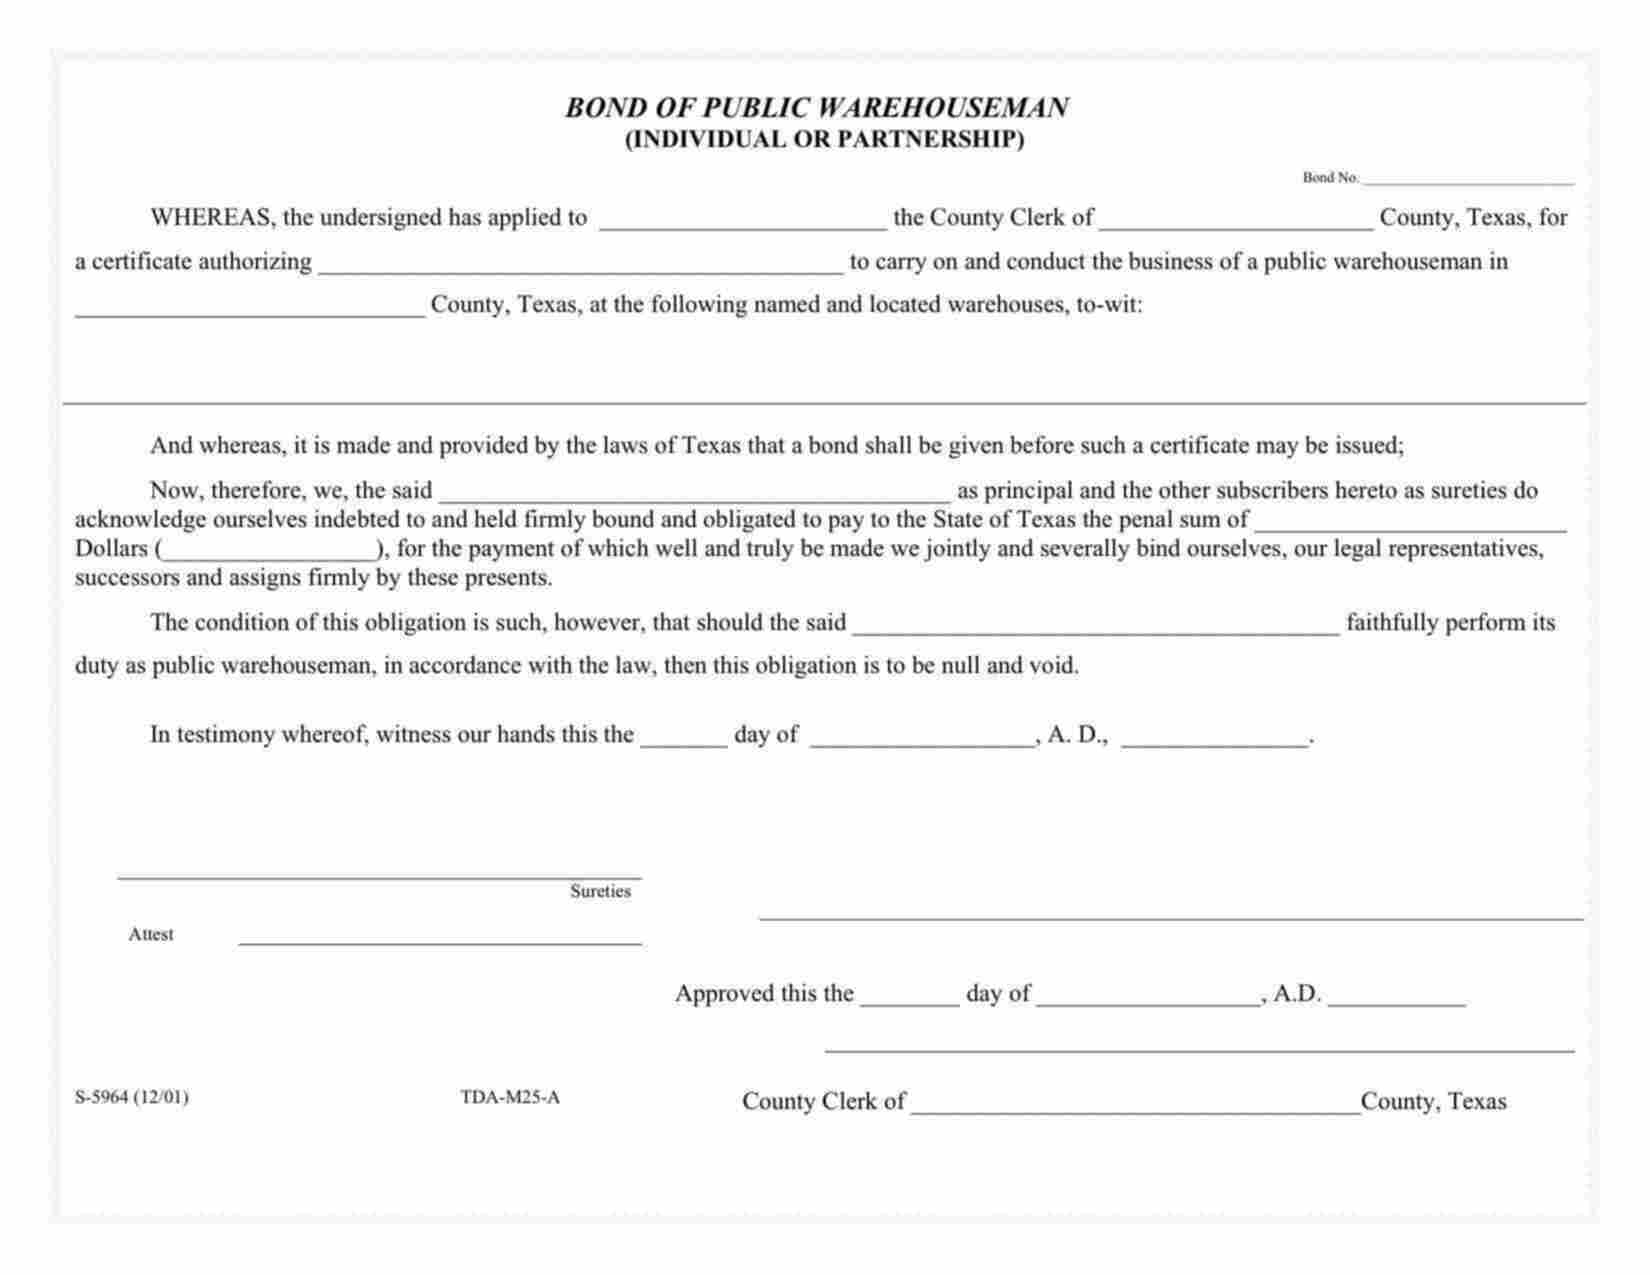 Texas Public Warehouseman (Individual or Partnership) Bond Form